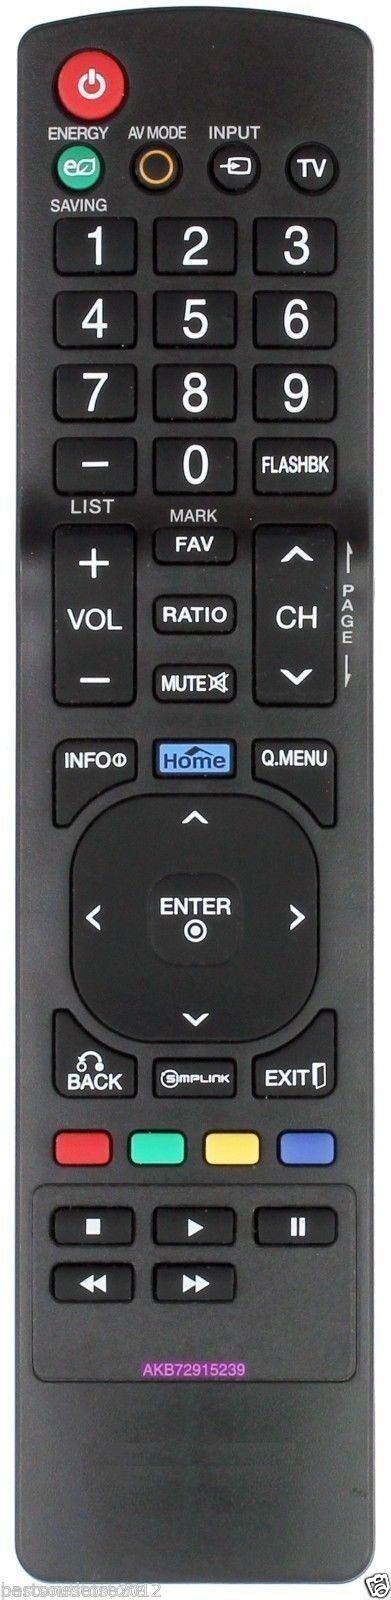 New Replaced Remote AKB72915239 for LG TV 22LV2500 26LV2500 32LK330 32LK450 32LV2500 32LV350